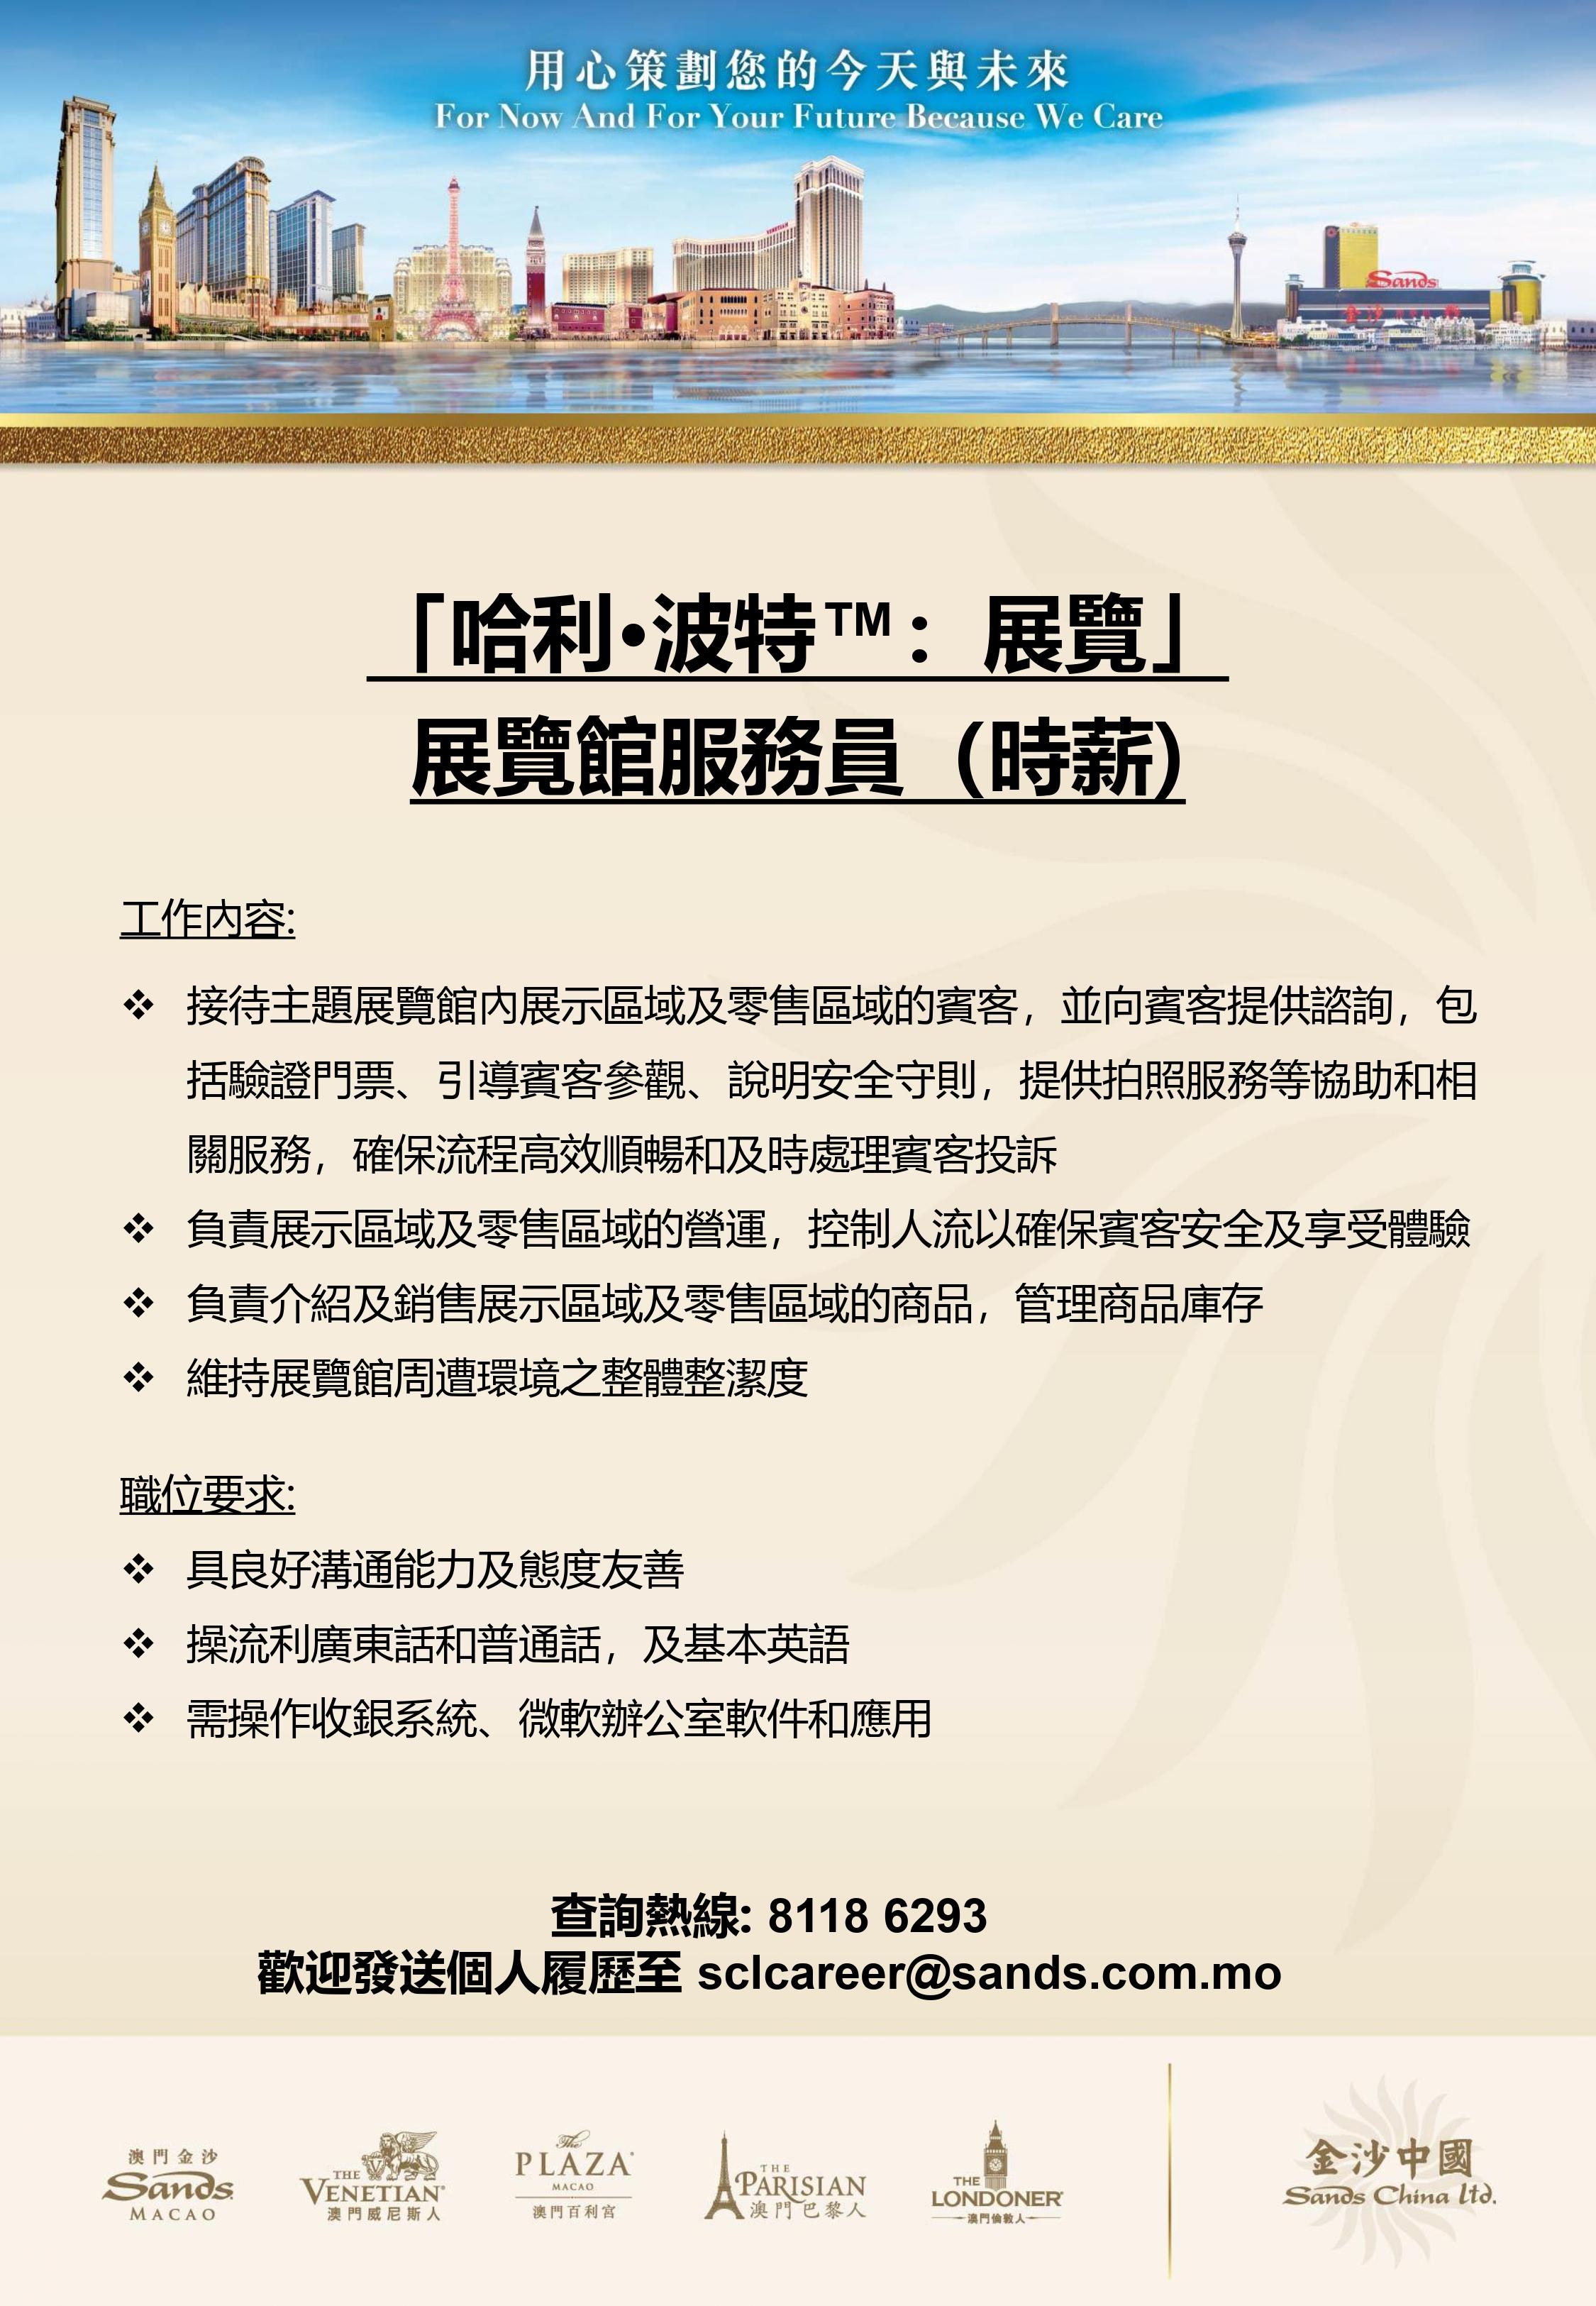 Harry Potter Exhibition - Sands China Ltd._page-0001.jpg